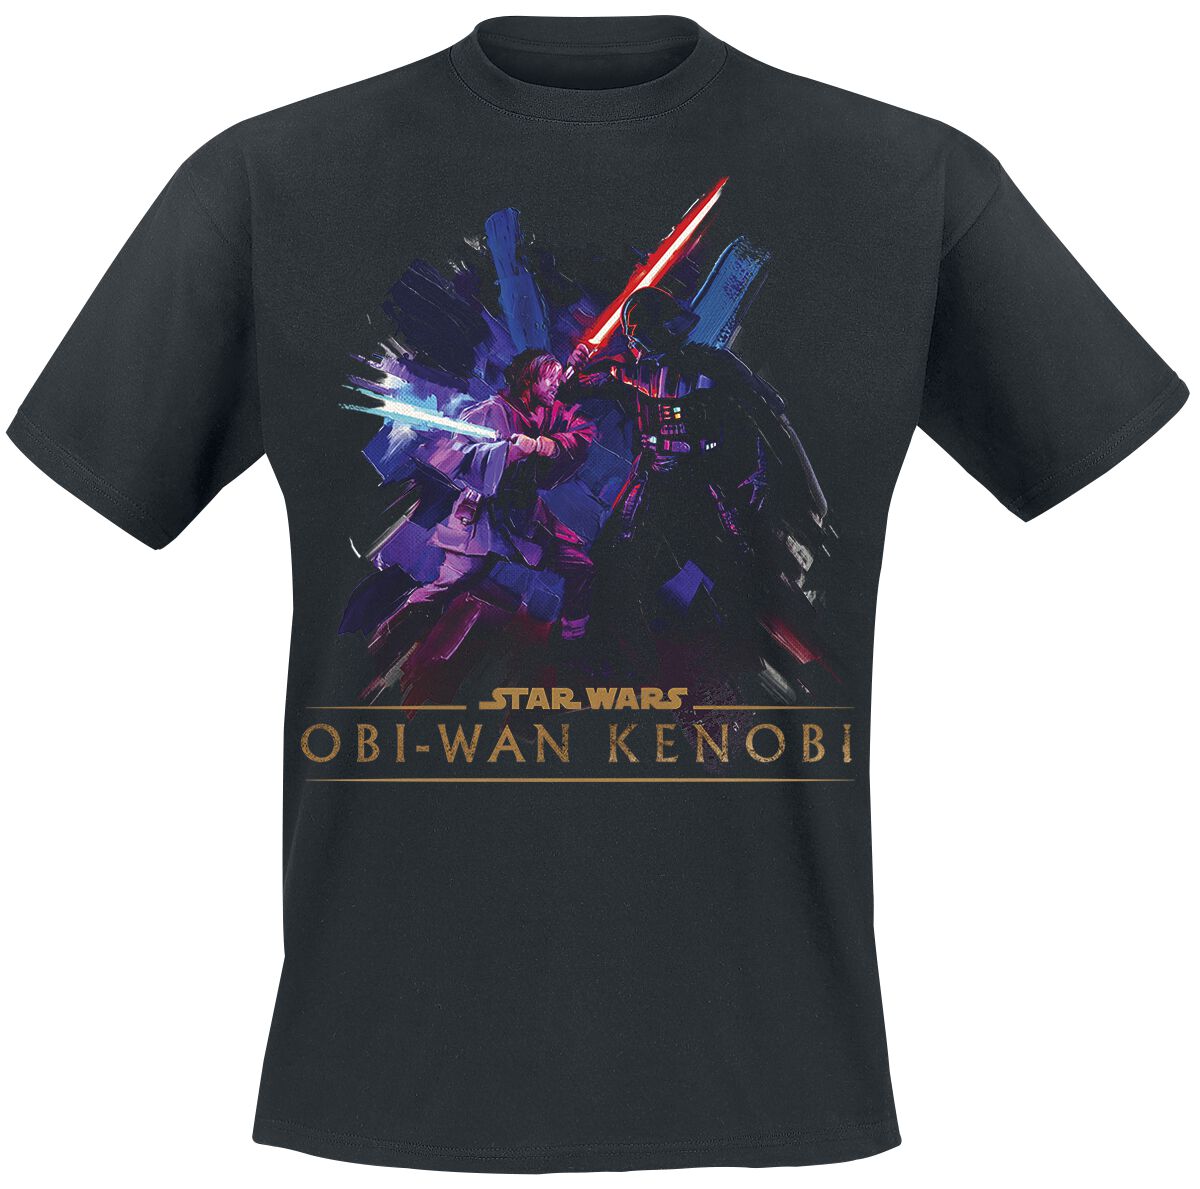 Star Wars Obi-Wan Kenobi - Vintage T-Shirt schwarz in XXL